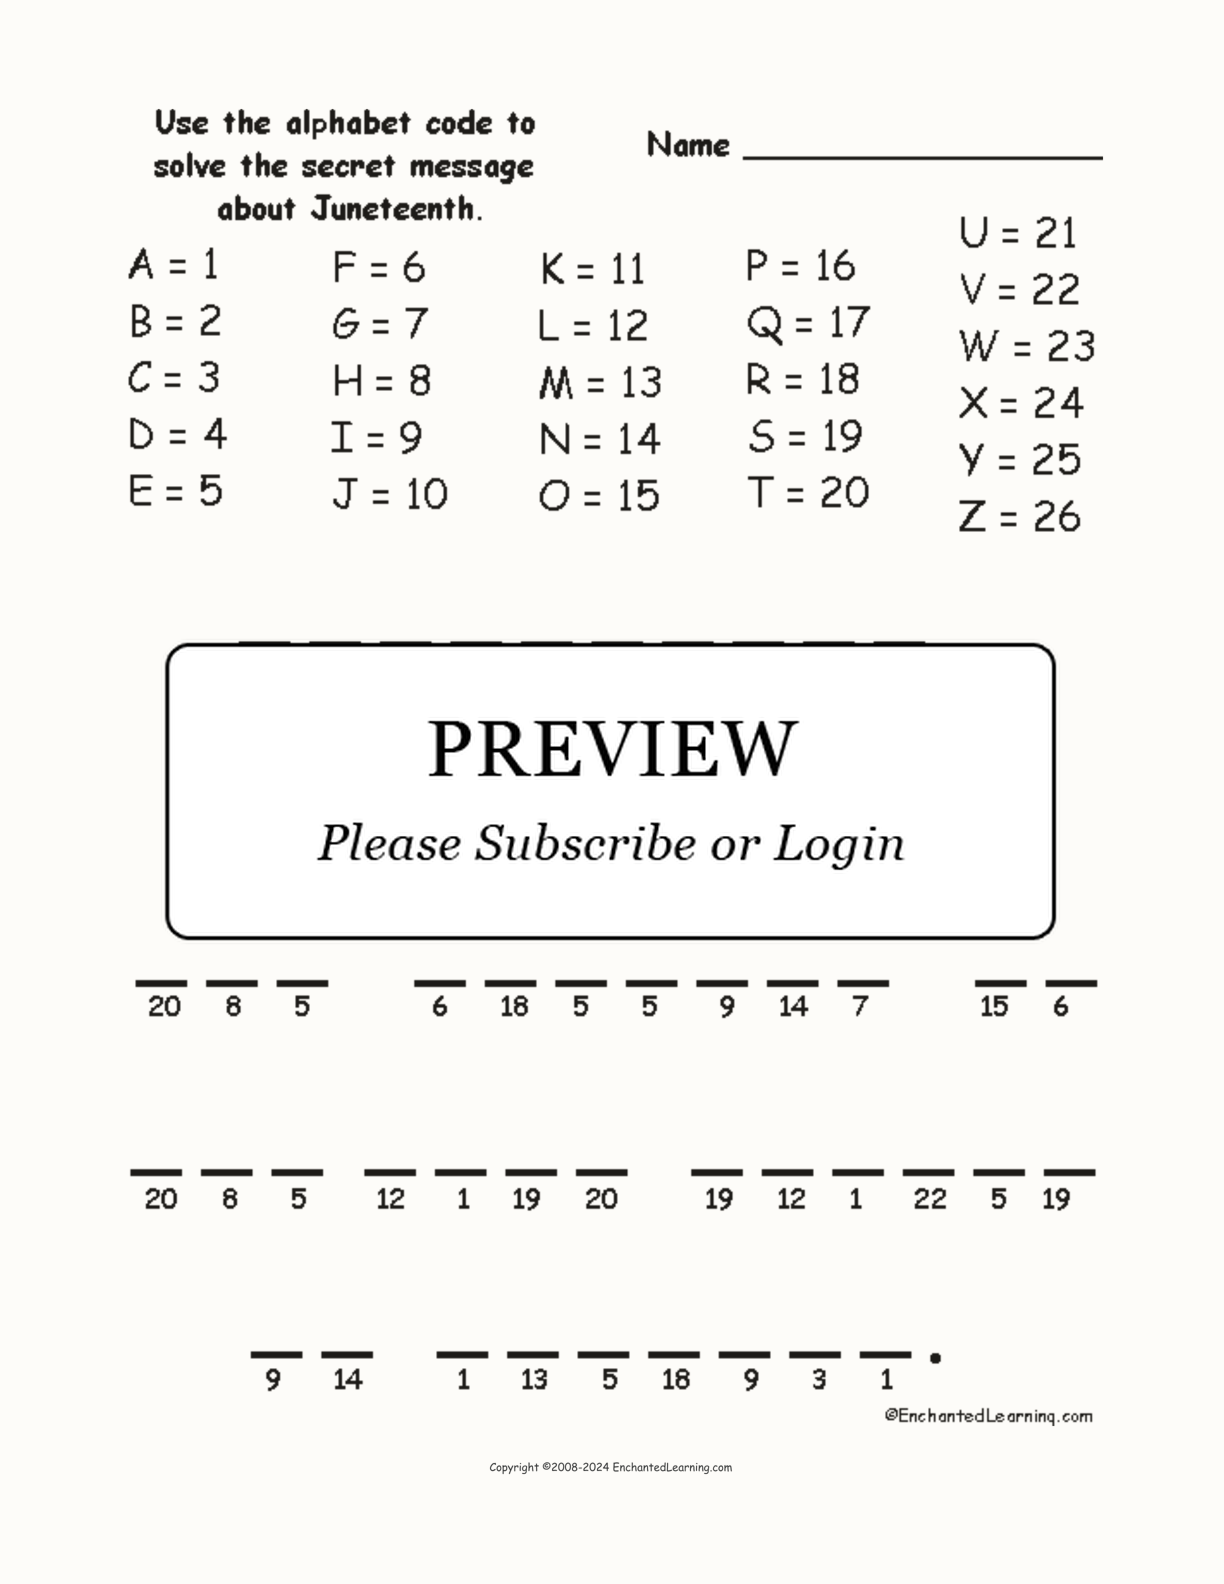 Juneteenth Alphabet Code interactive worksheet page 1